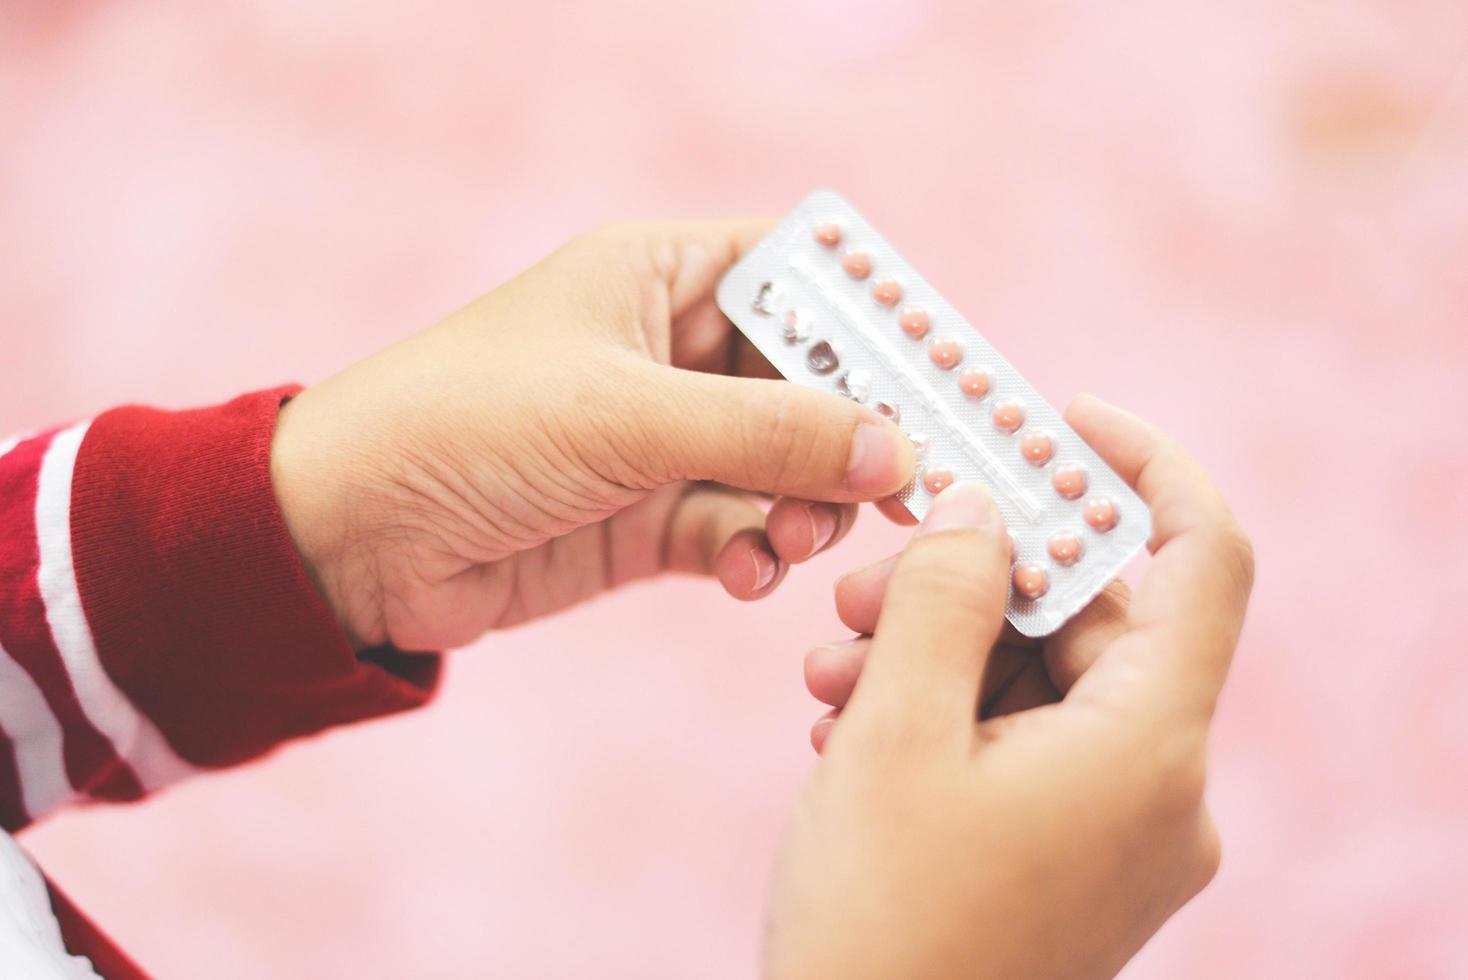 Contraception pills in hand woman holding - Birth control contraceptive means prevent pregnancy photo